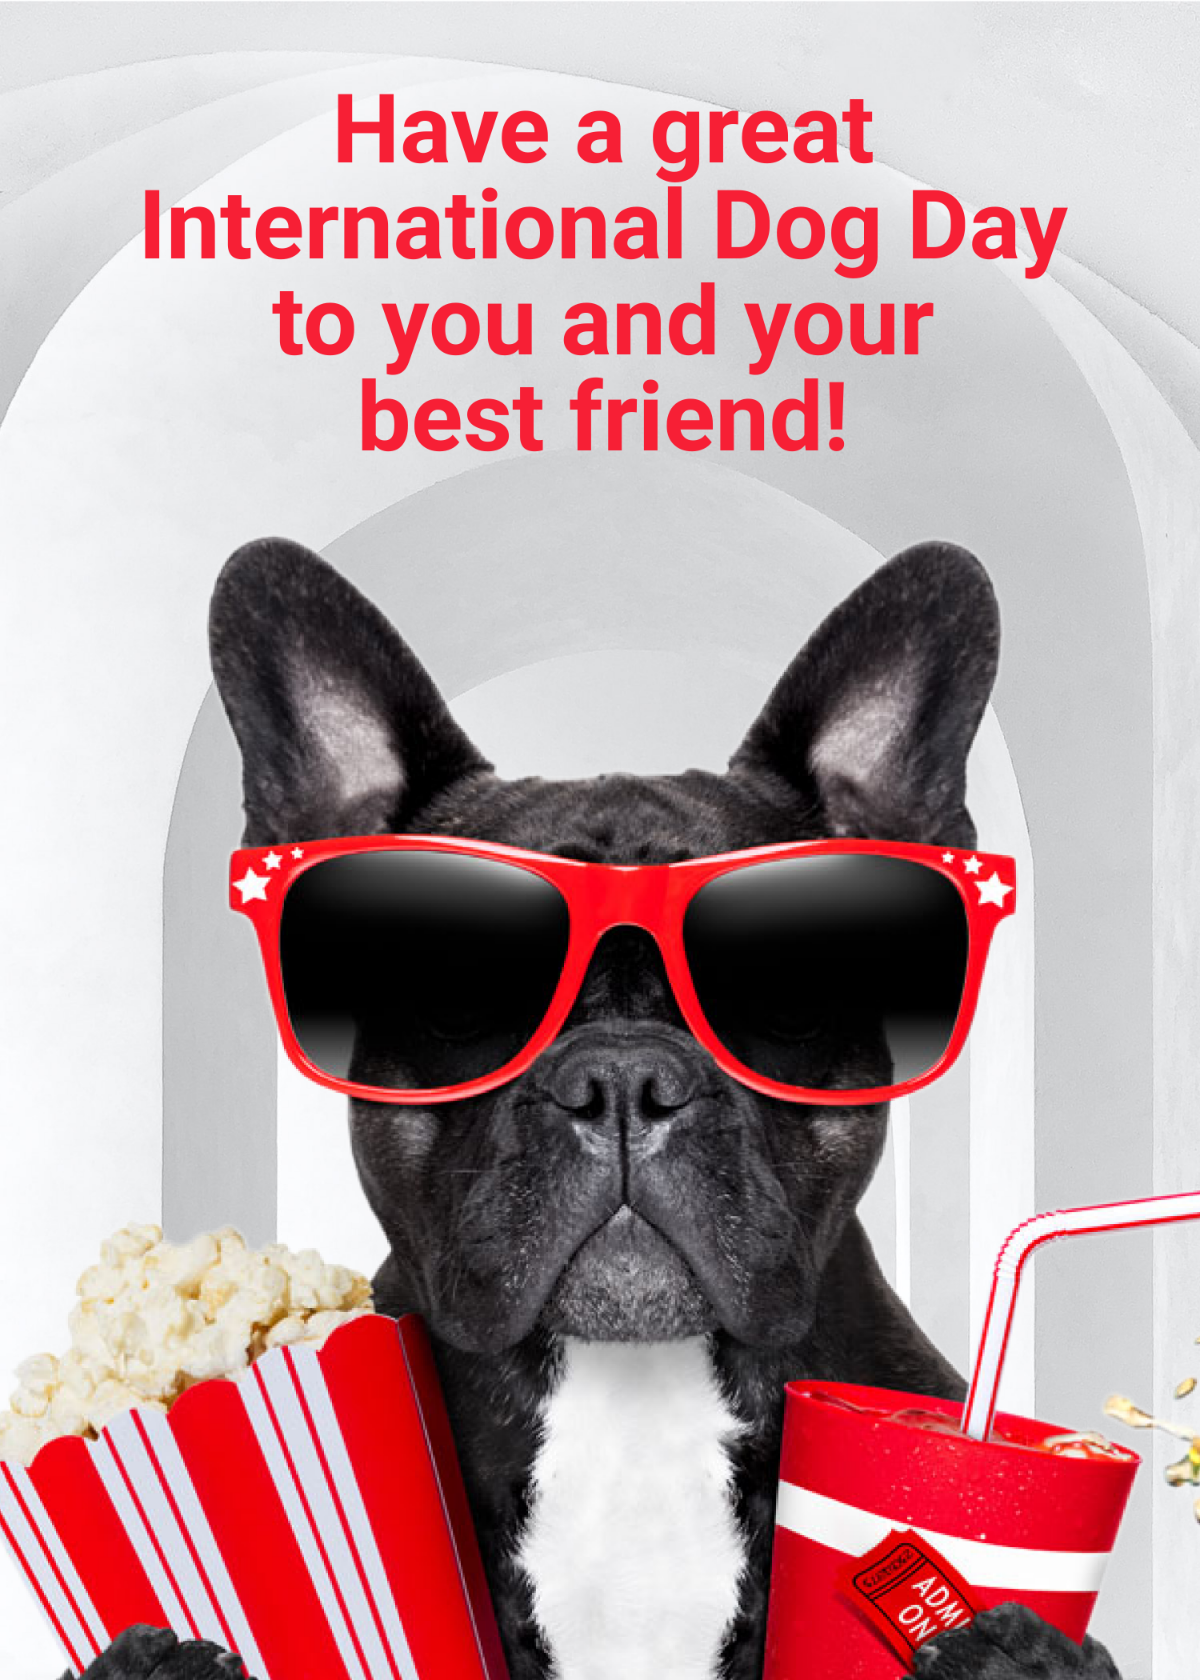 International Dog Day  Greeting Card Template